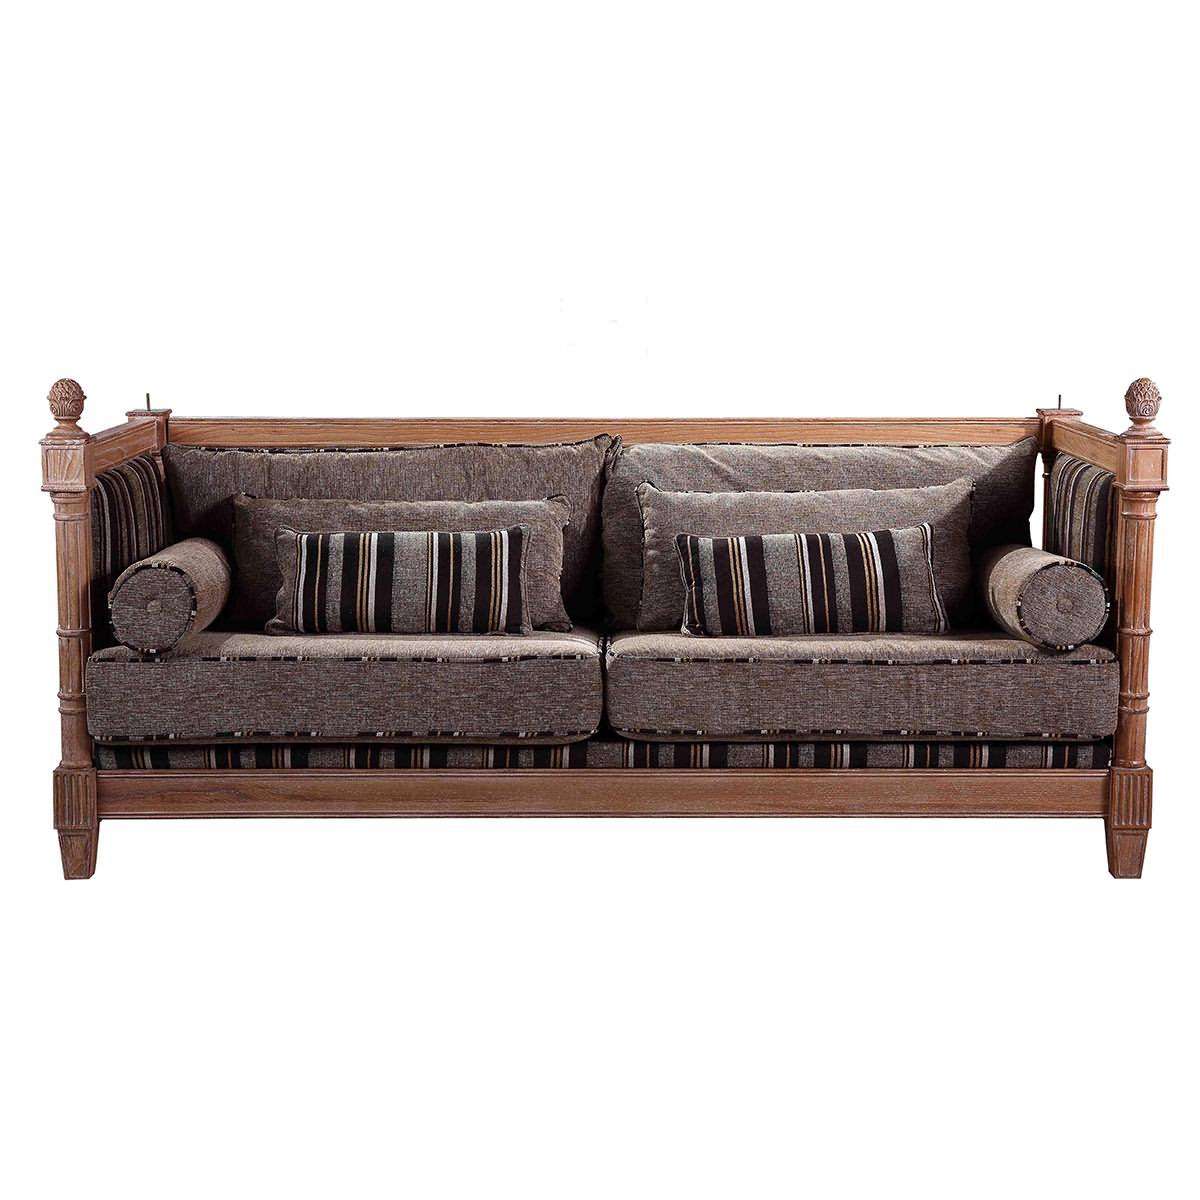 Classic style sofa|Solid wood Sofa|Living room Furniture